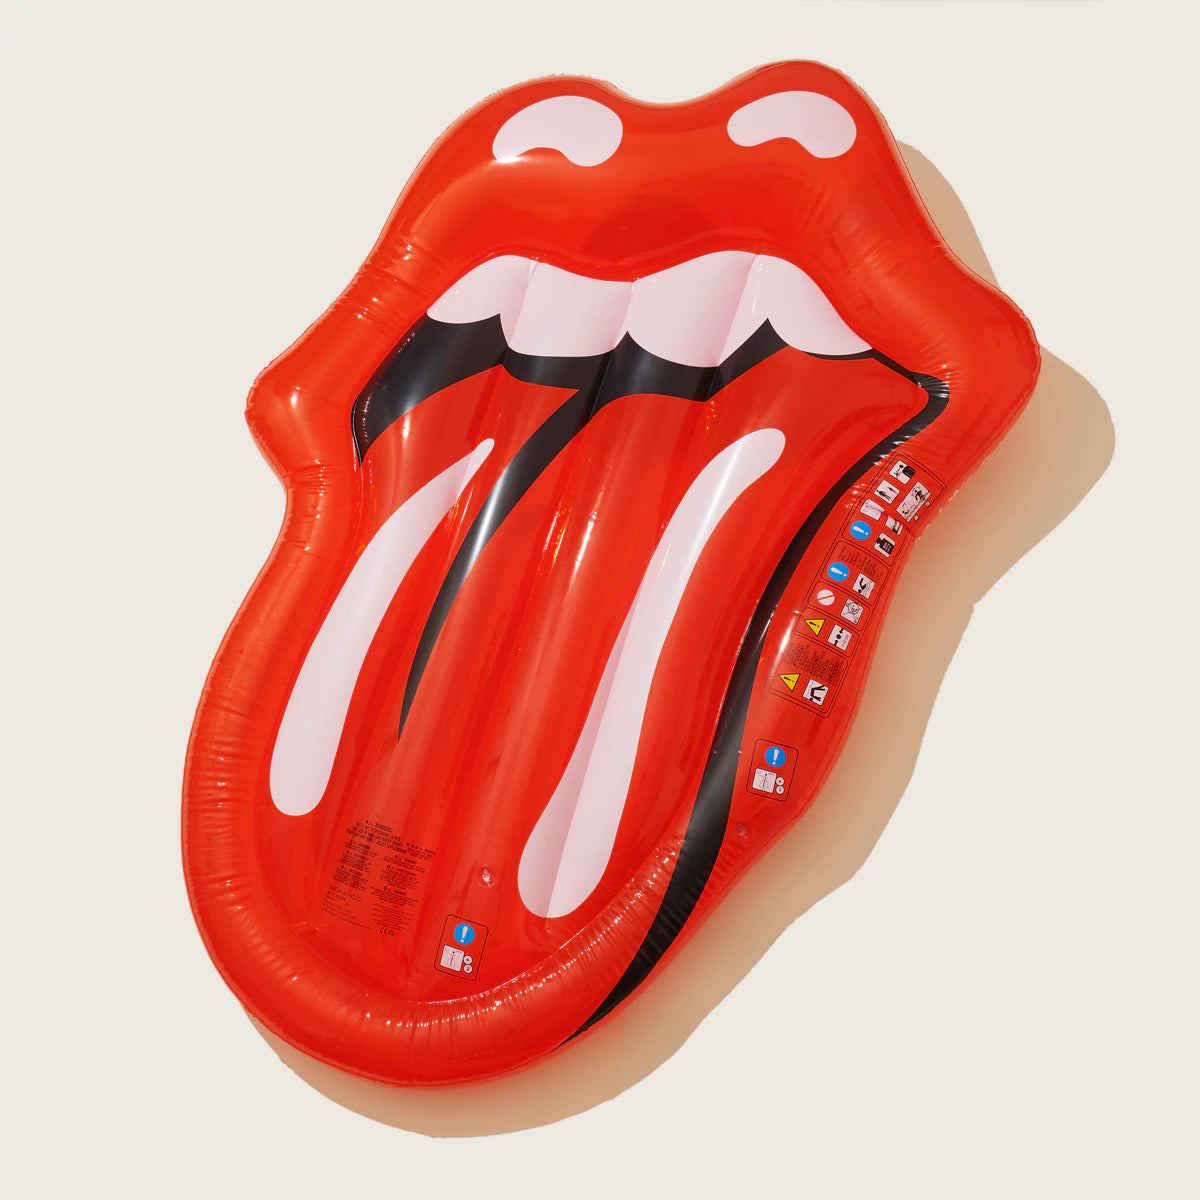 Komerdare Rolling Stones